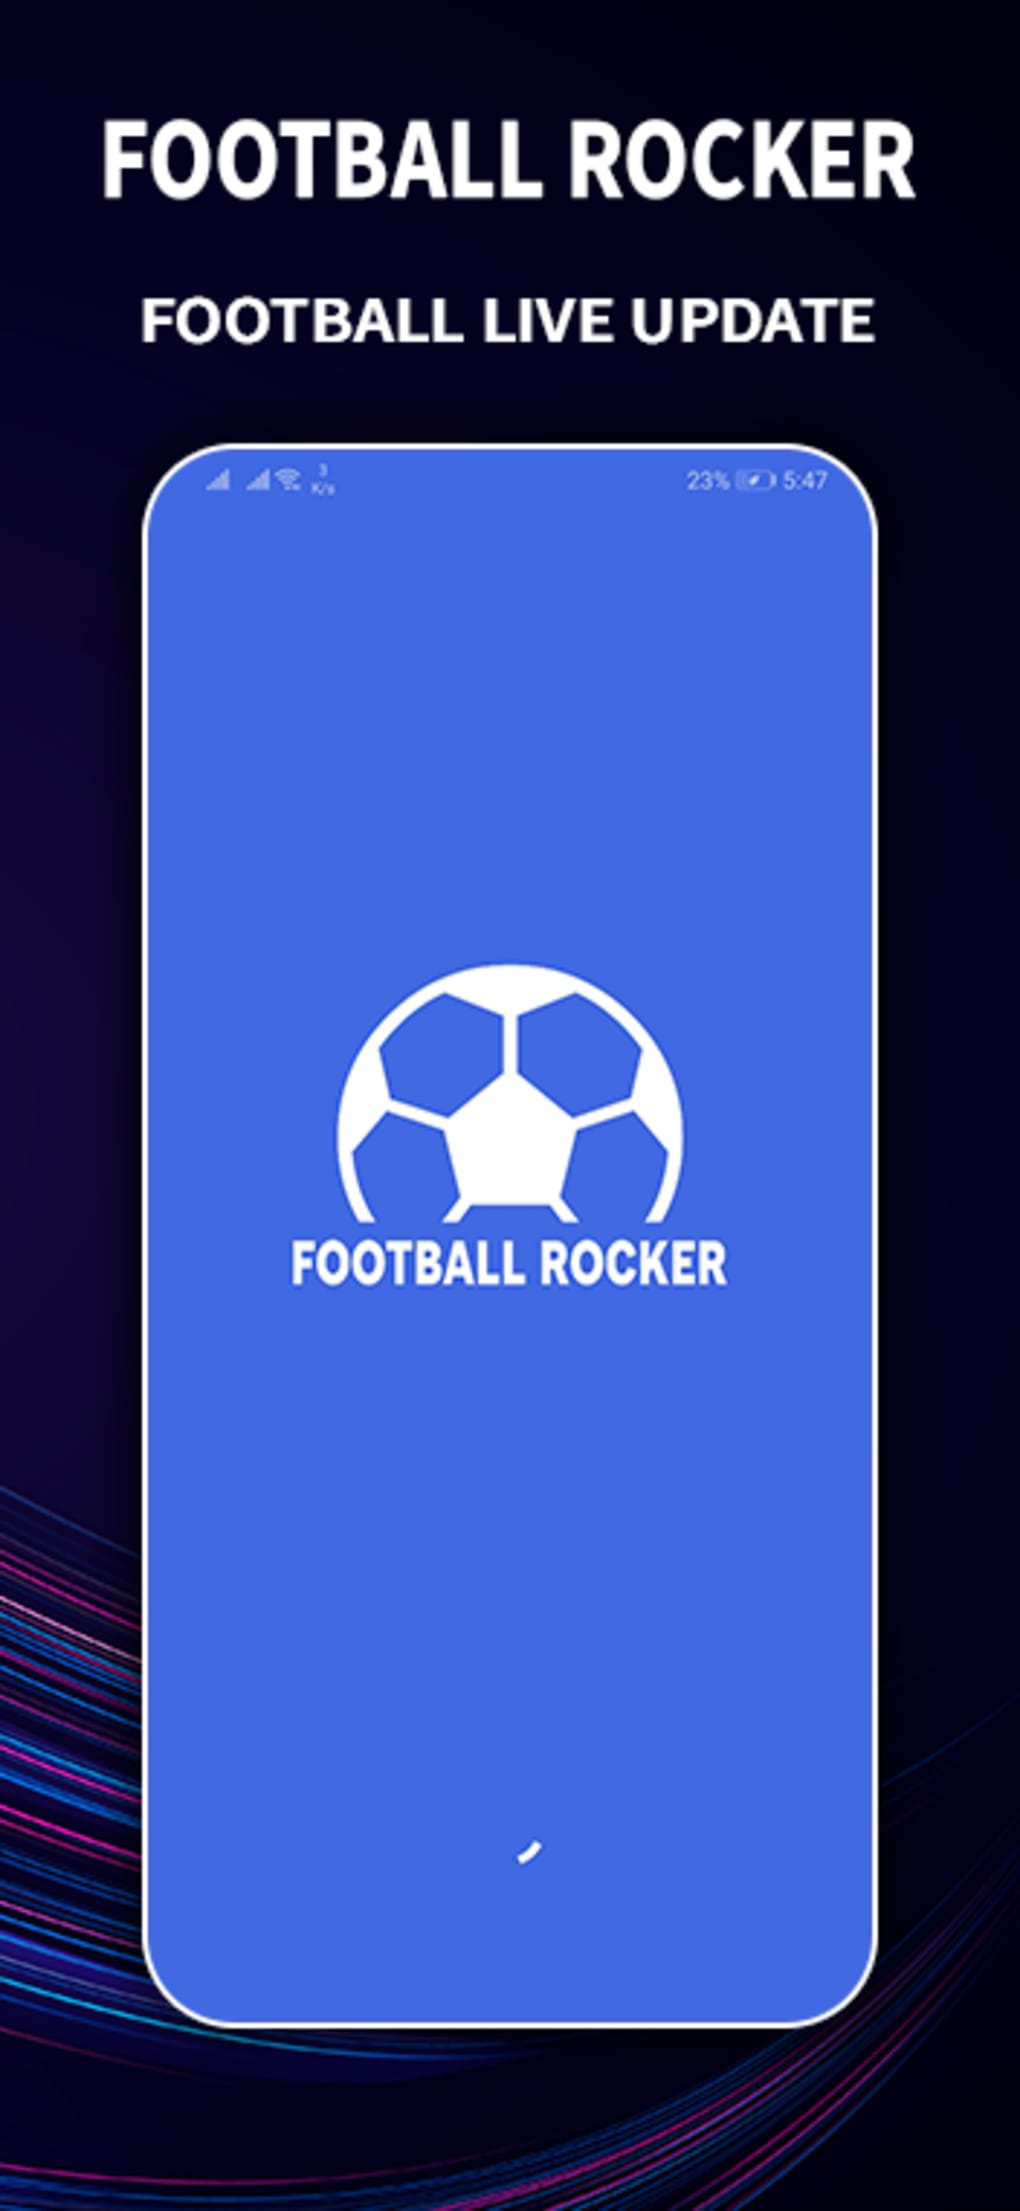 Fut-MAX: Futebol ao vivo help for Android - Download